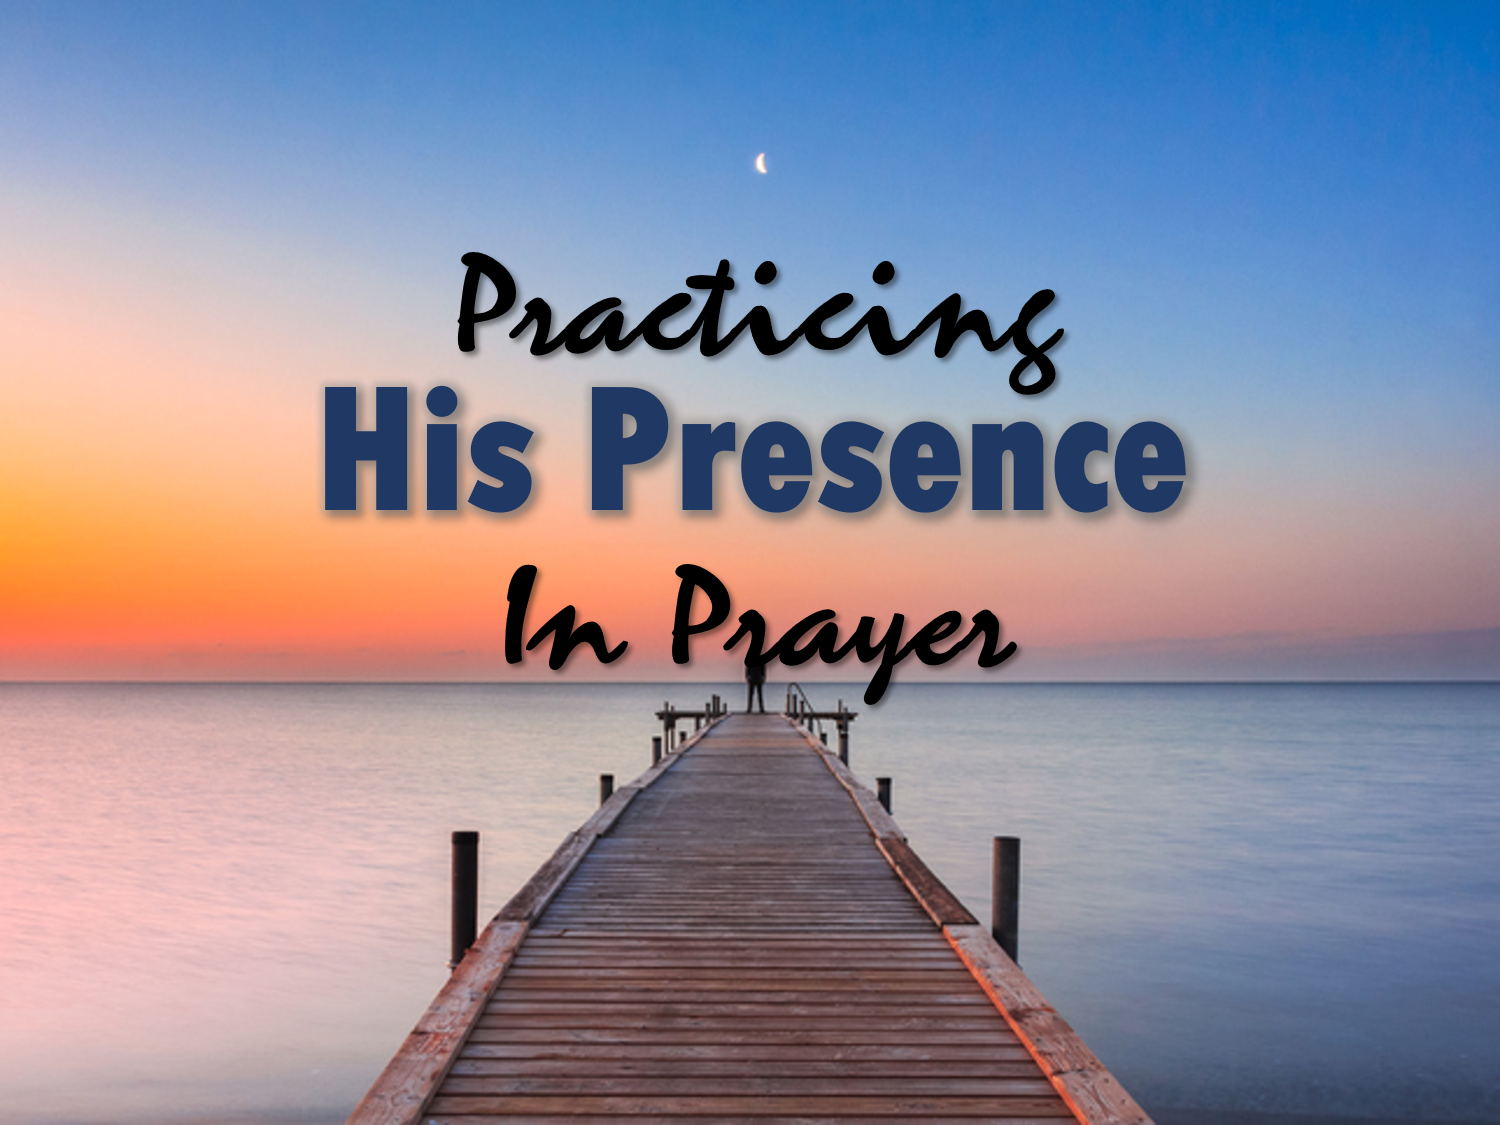 Practicing His Presence in Prayer